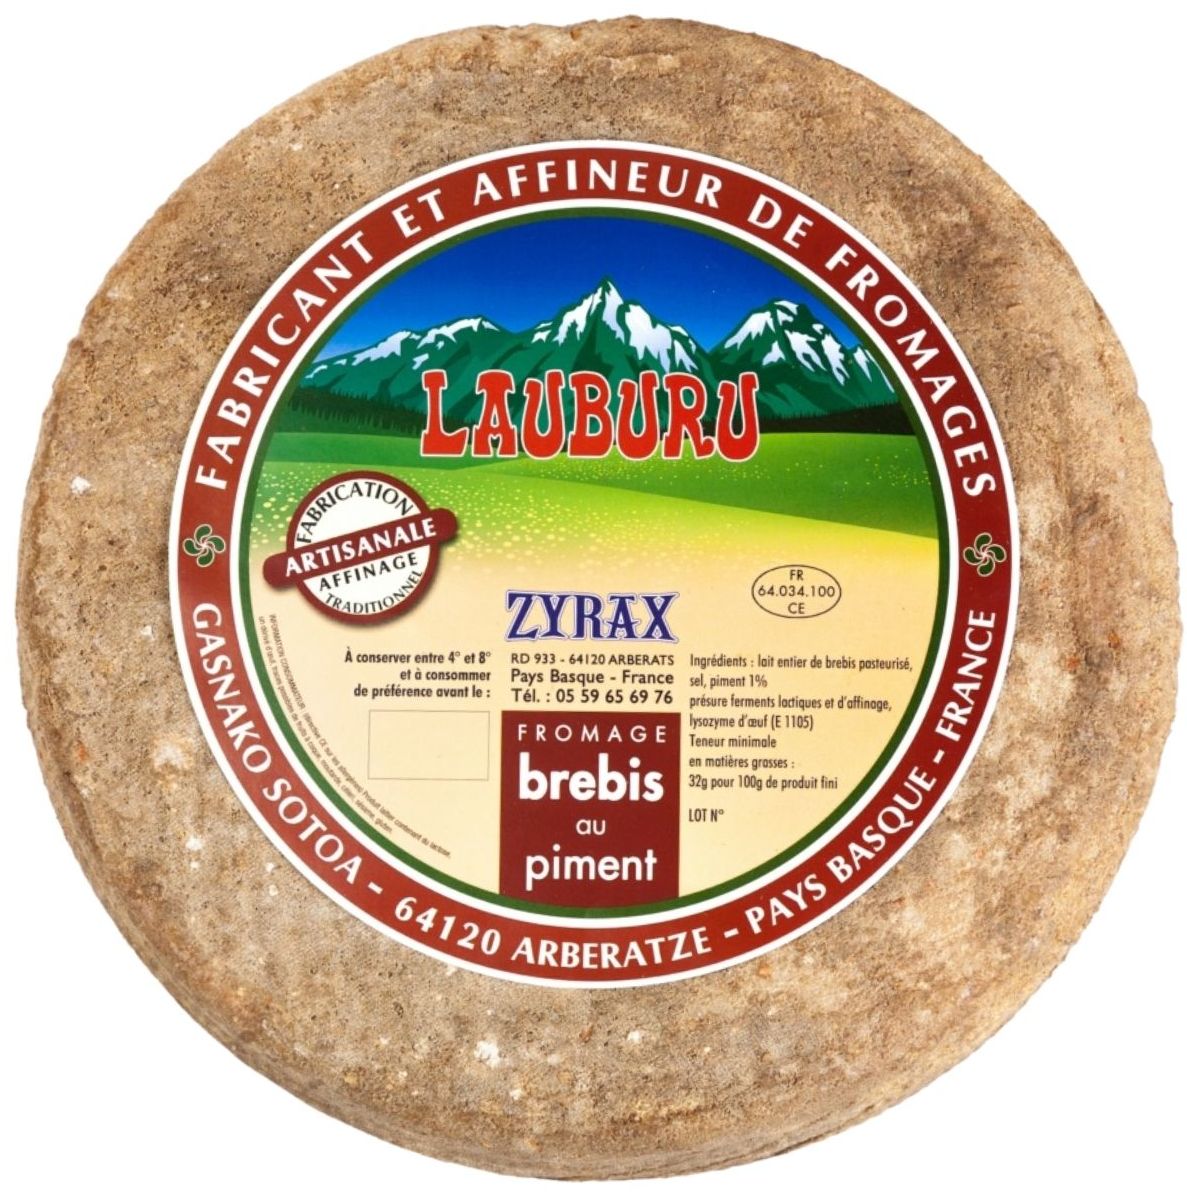 Brebis au Piment-zyrax fromage-www.luxfood-shop.fr_